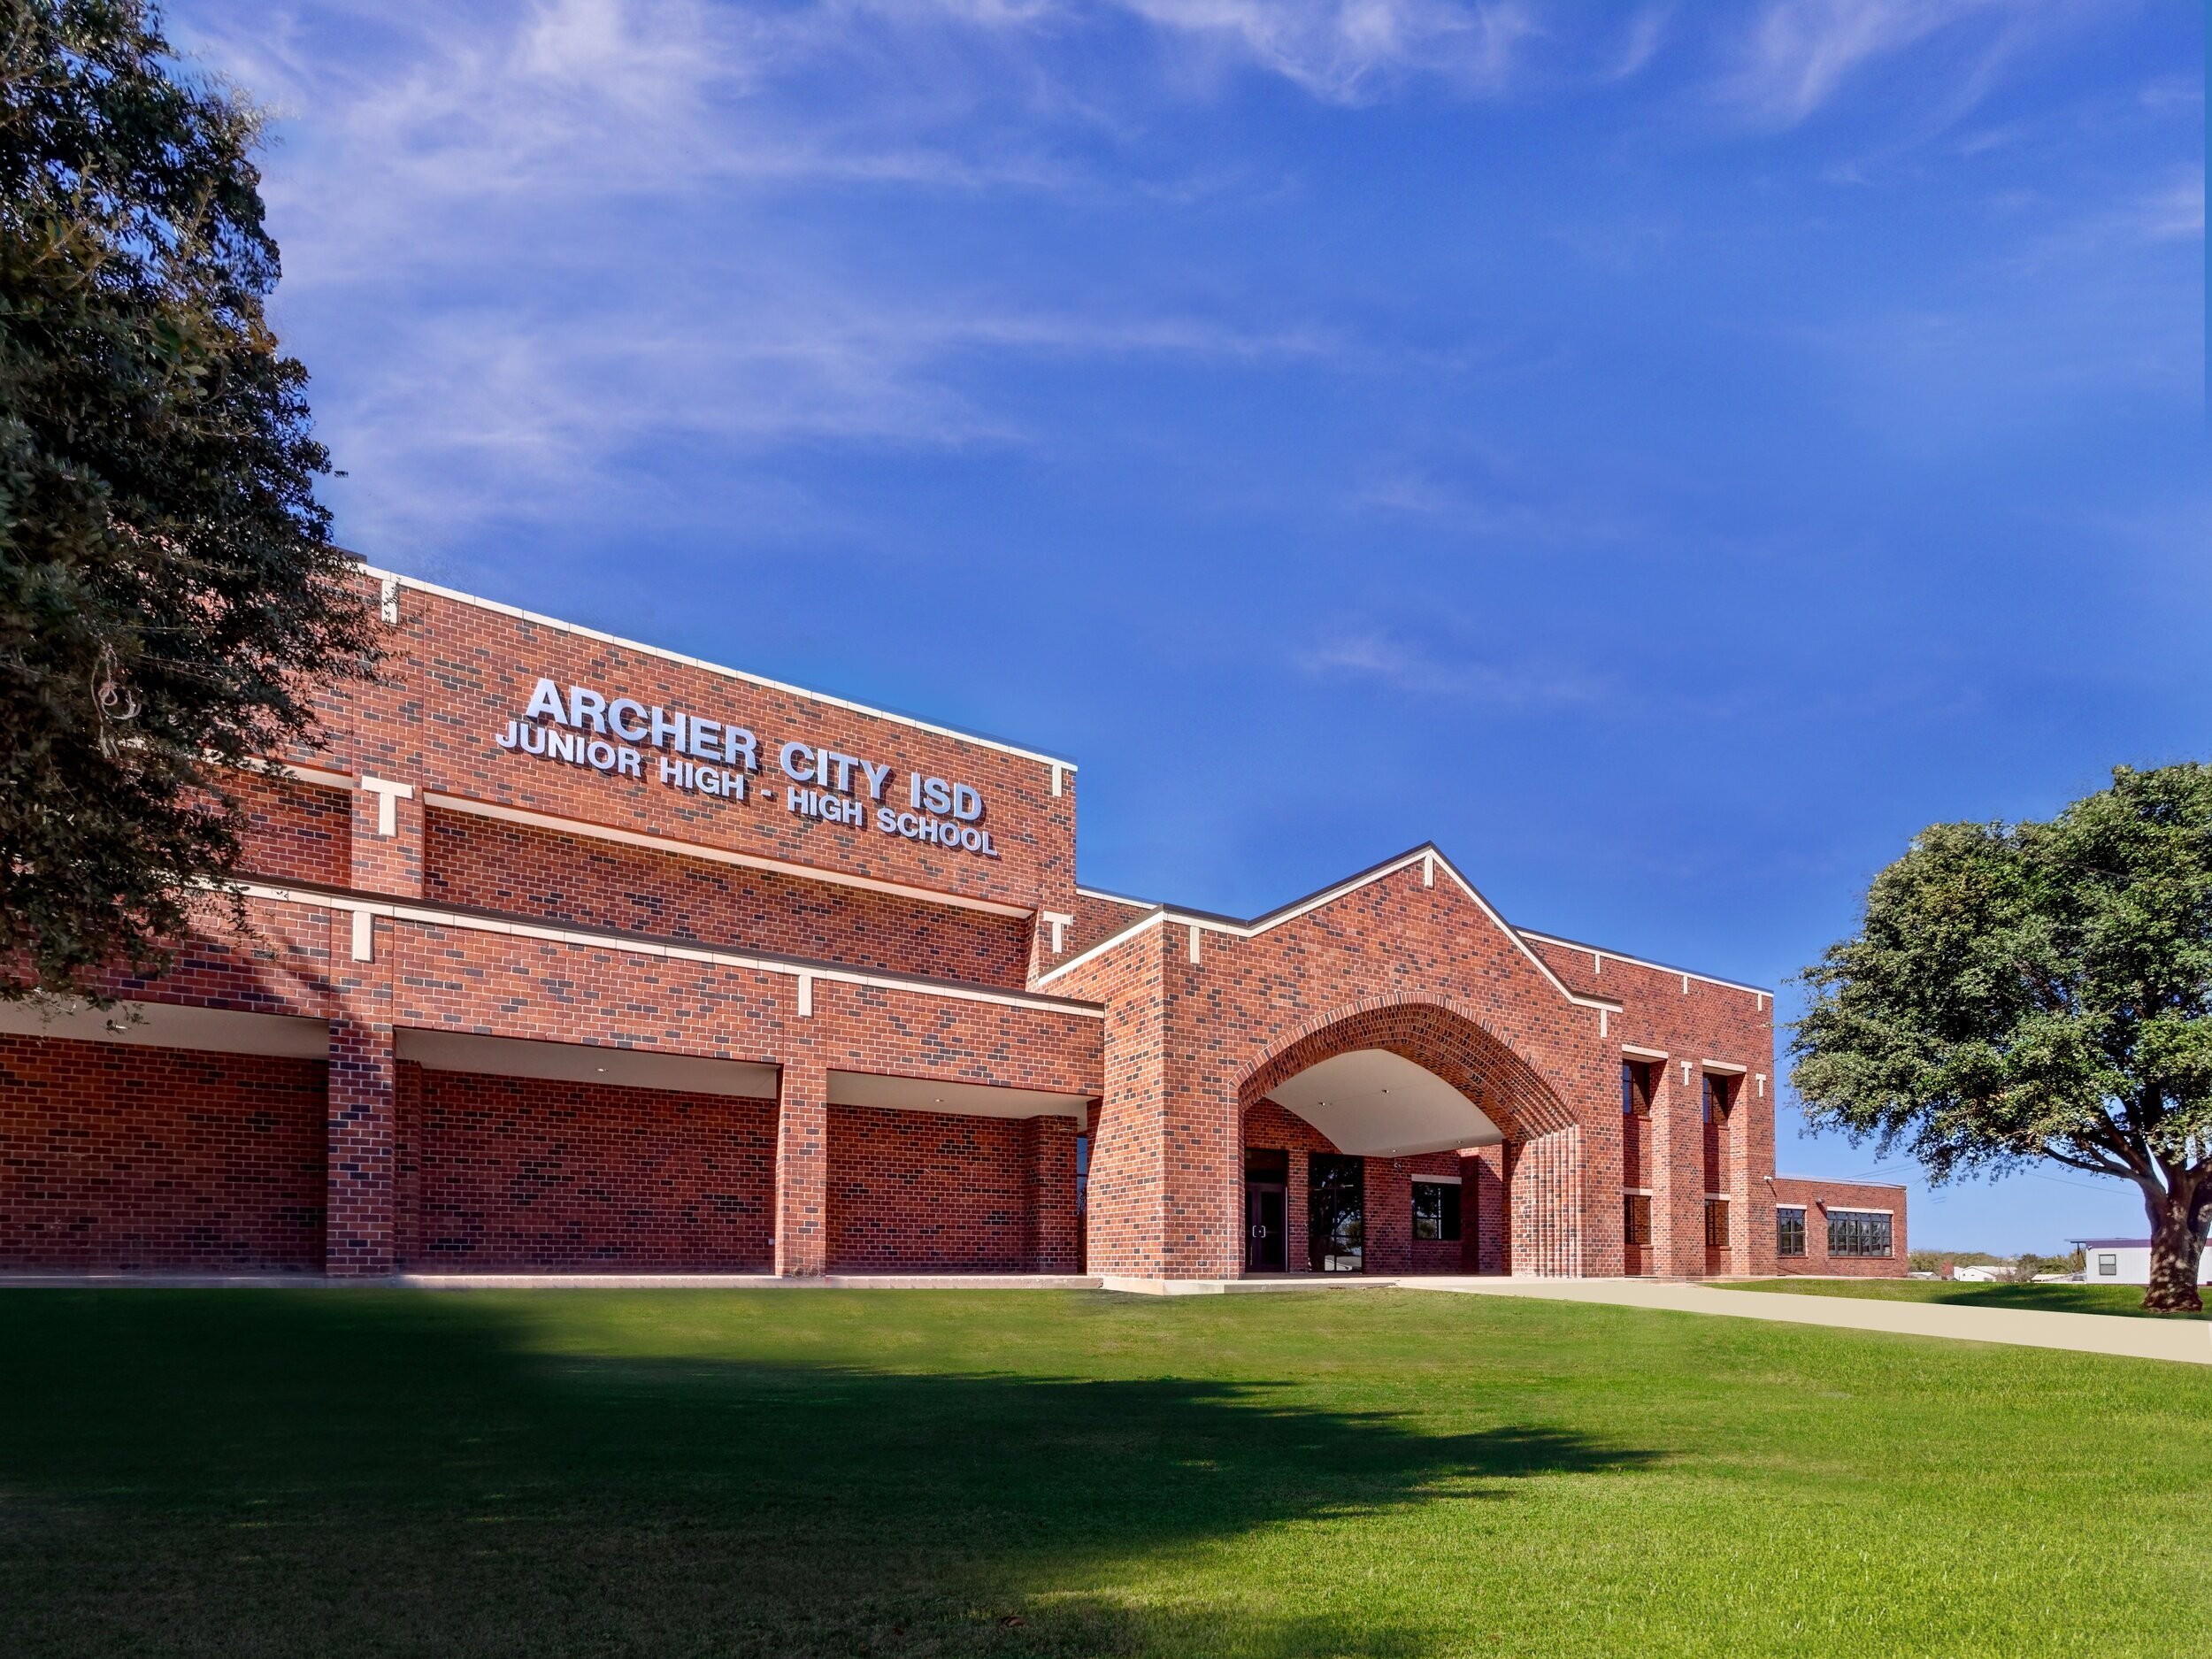 Archer City new JR/SR High School